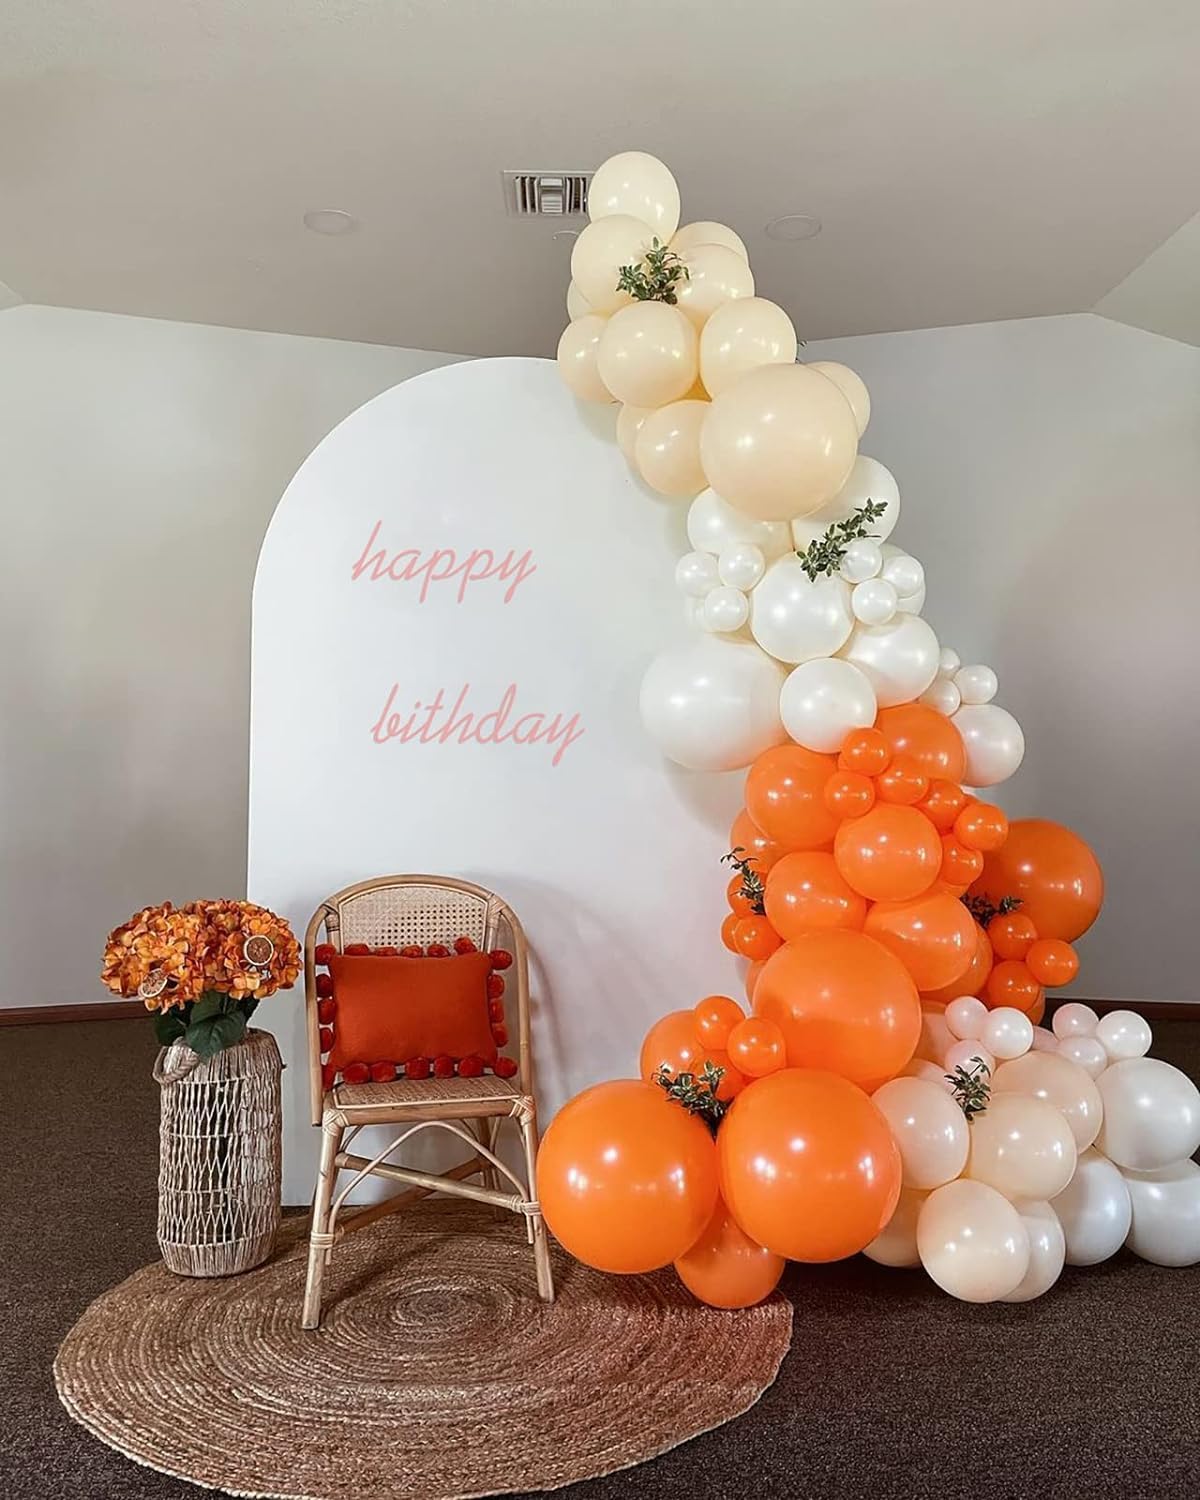 FOTIOMRG Orange Balloons 12 inch, 100 Pack Burnt Orange Latex Balloons Helium Quality for Halloween Birthday Wedding Baby Shower Party Decorations (with Orange Ribbon)